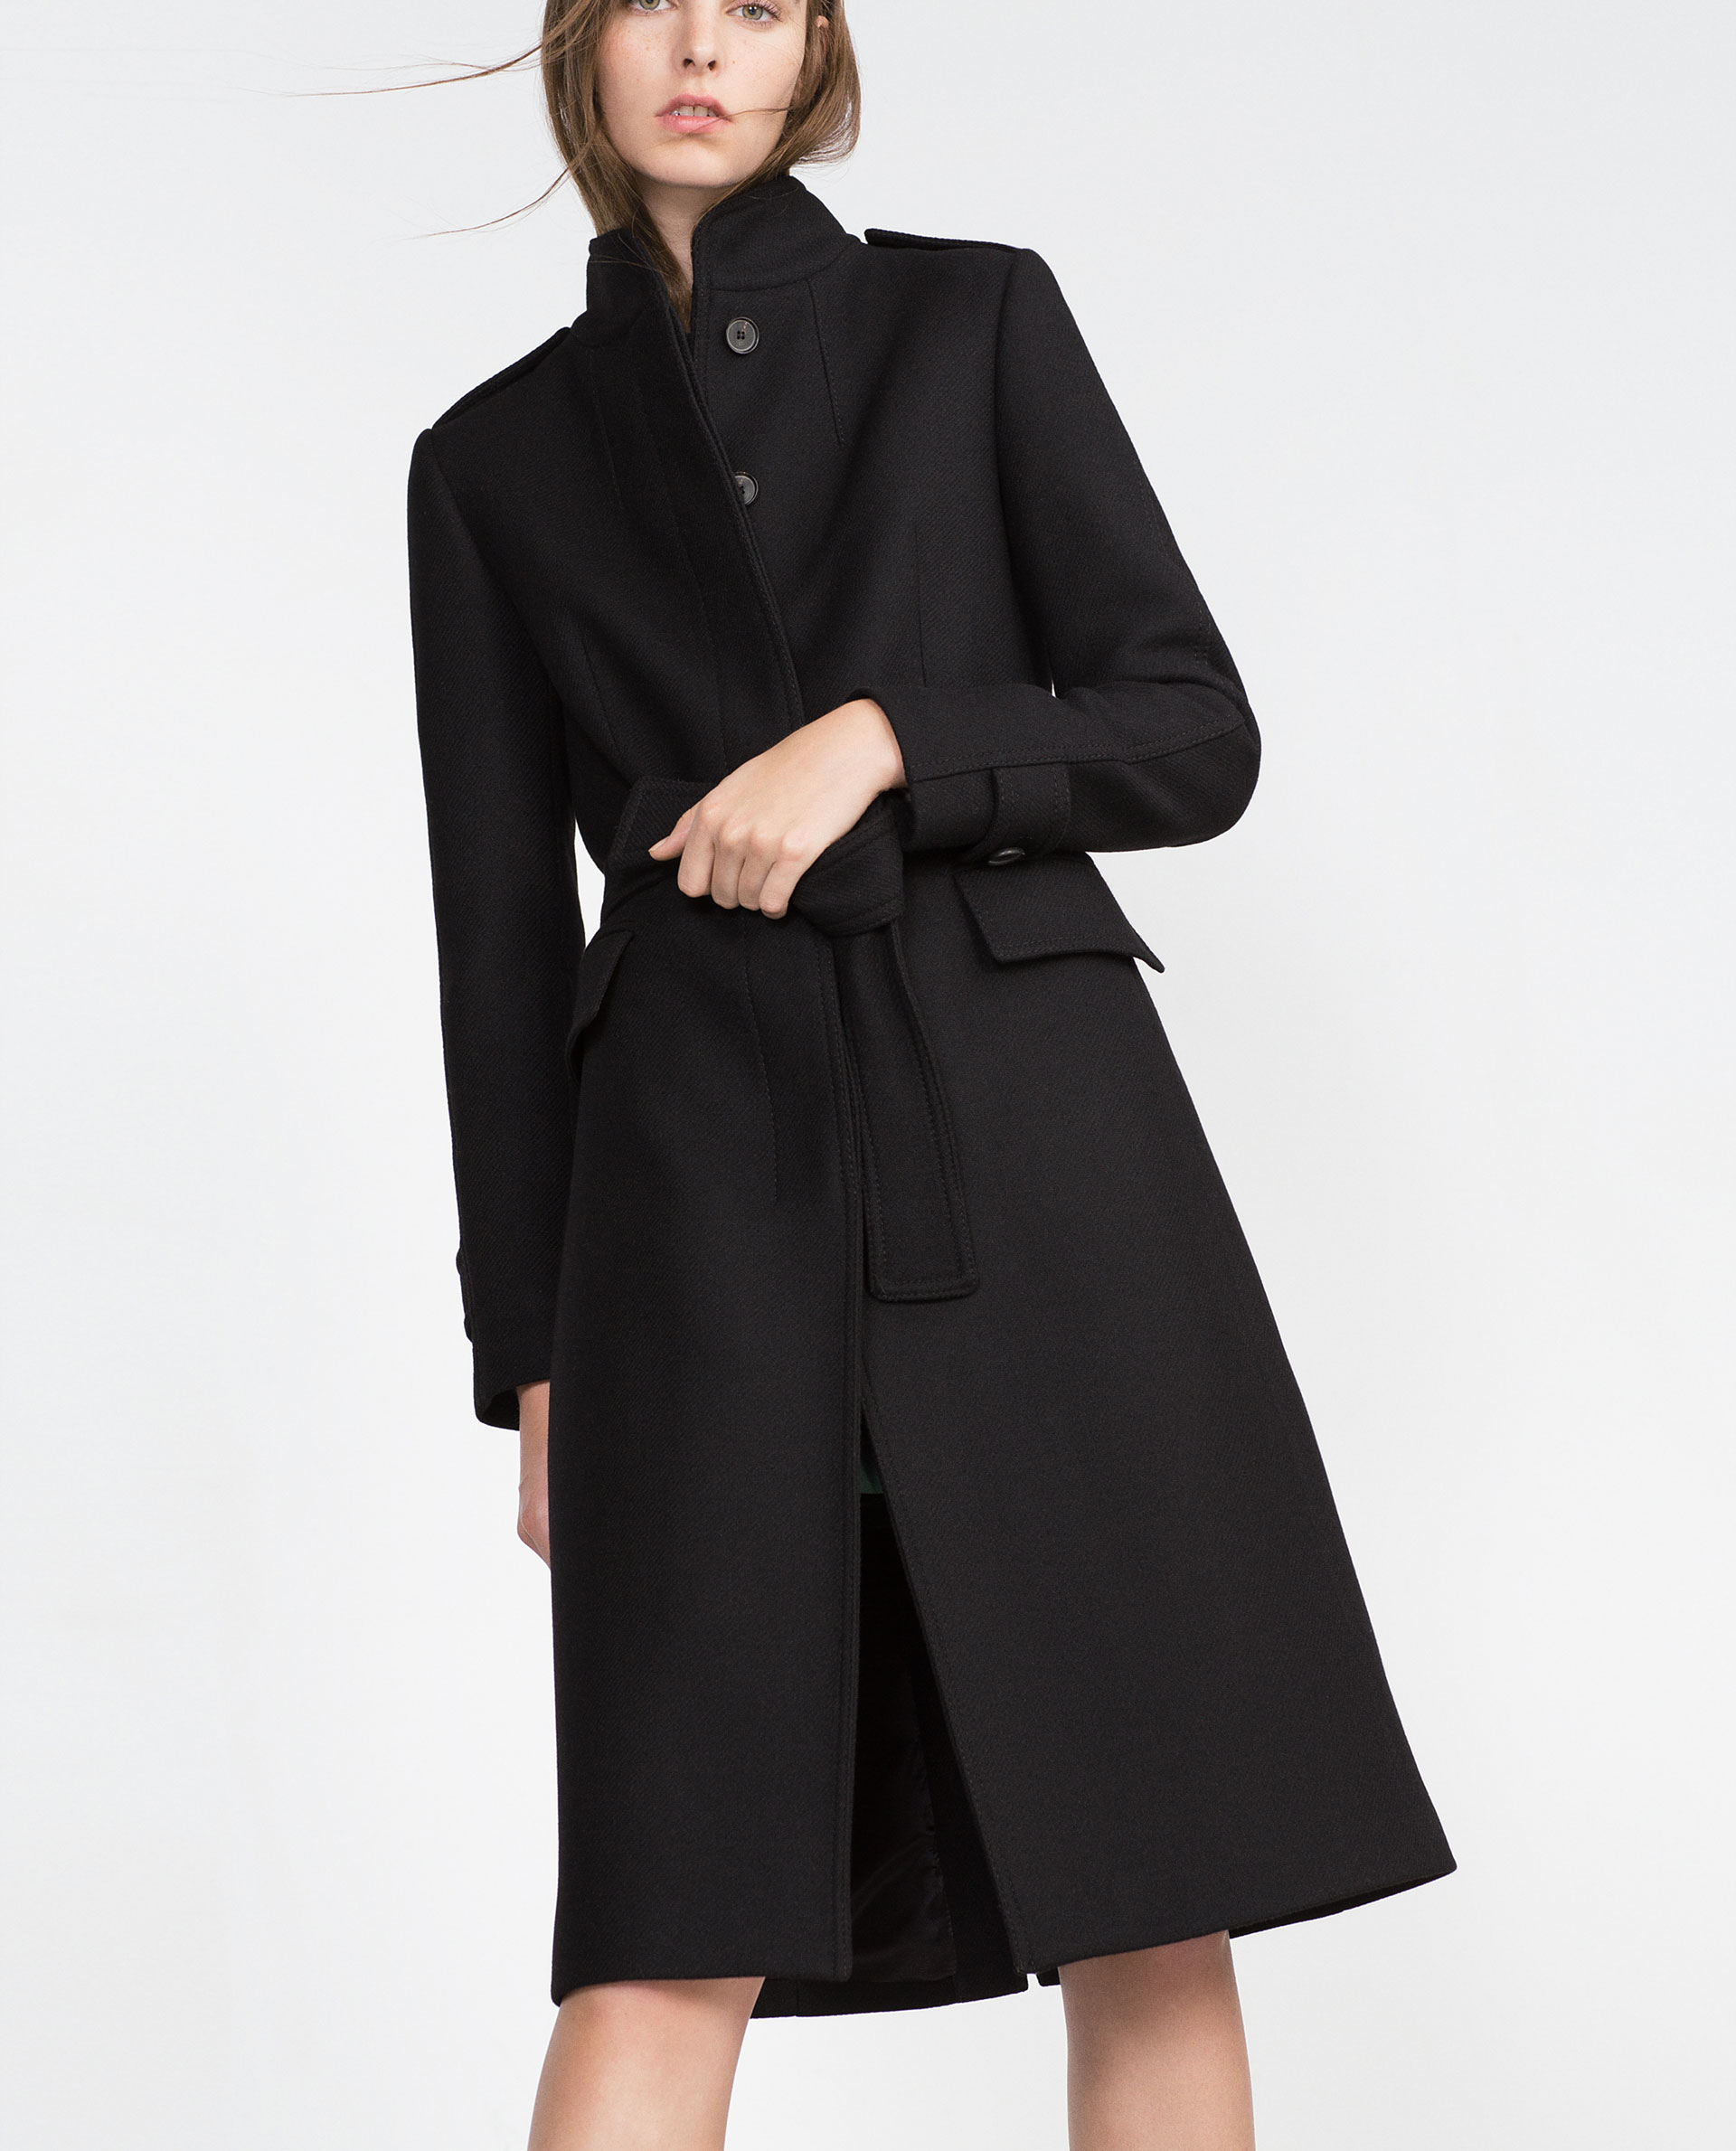 Zara High Collar Coat in Black | Lyst